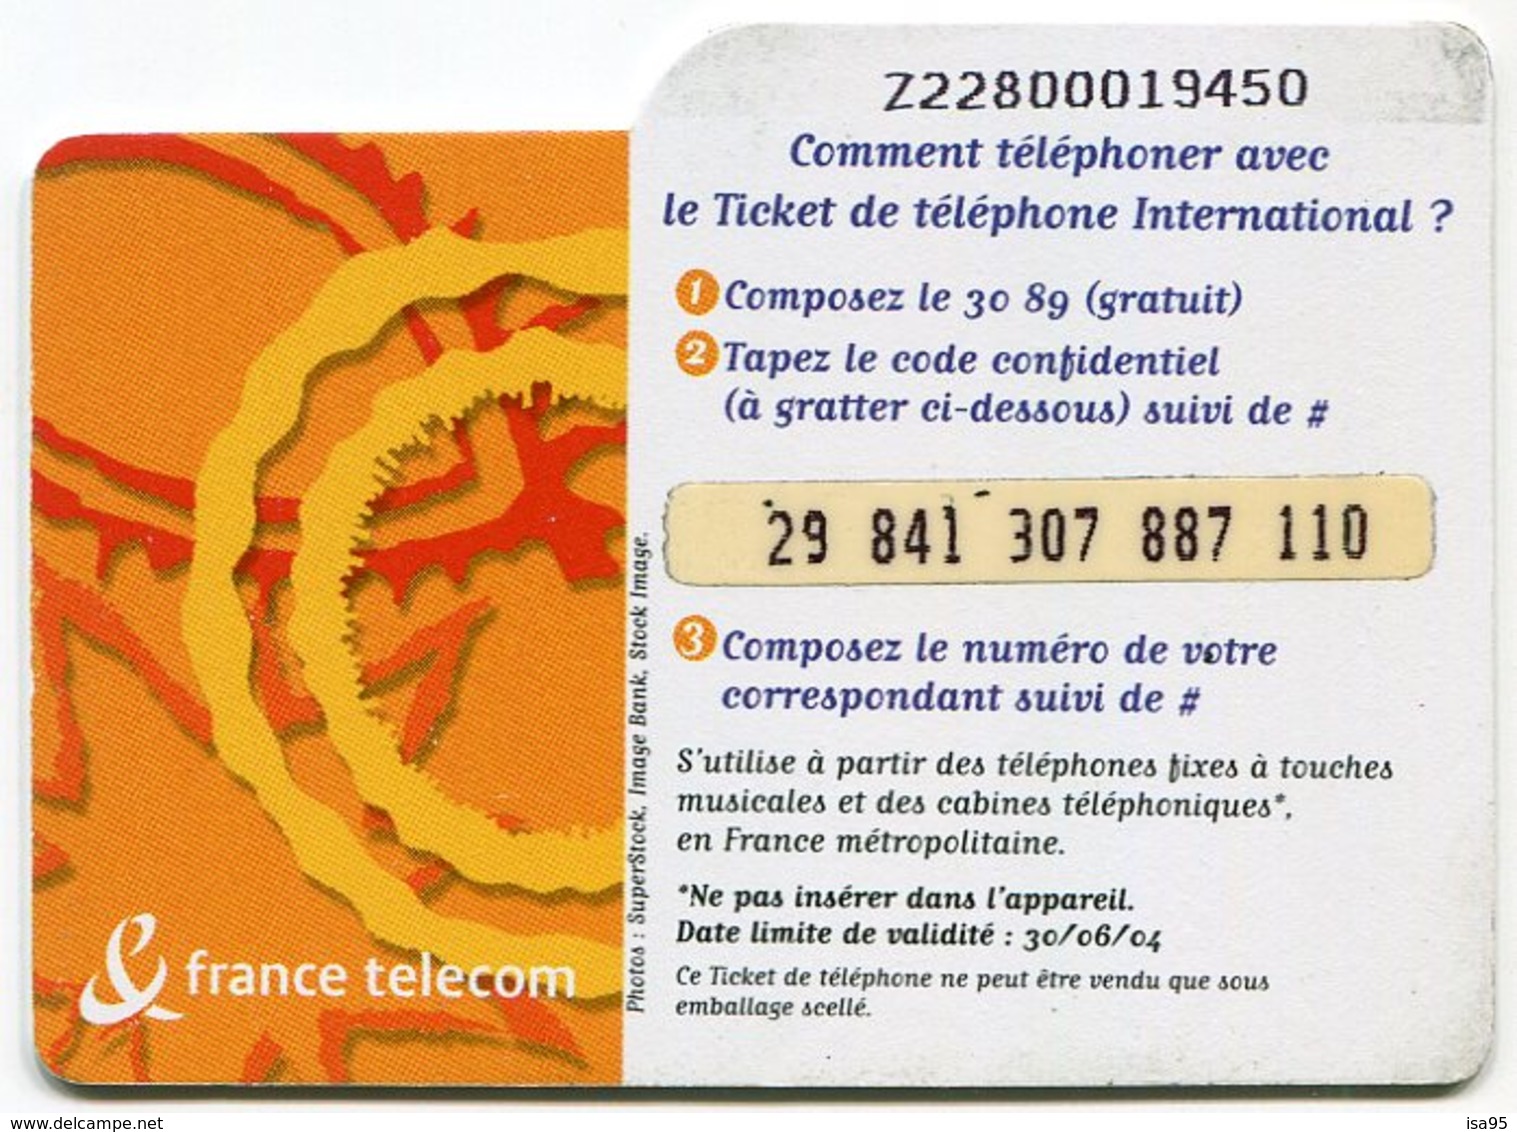 TELECARTE-LE TICKET DE TELEPHONE INTERNATIONAL-2004-15€ - FT